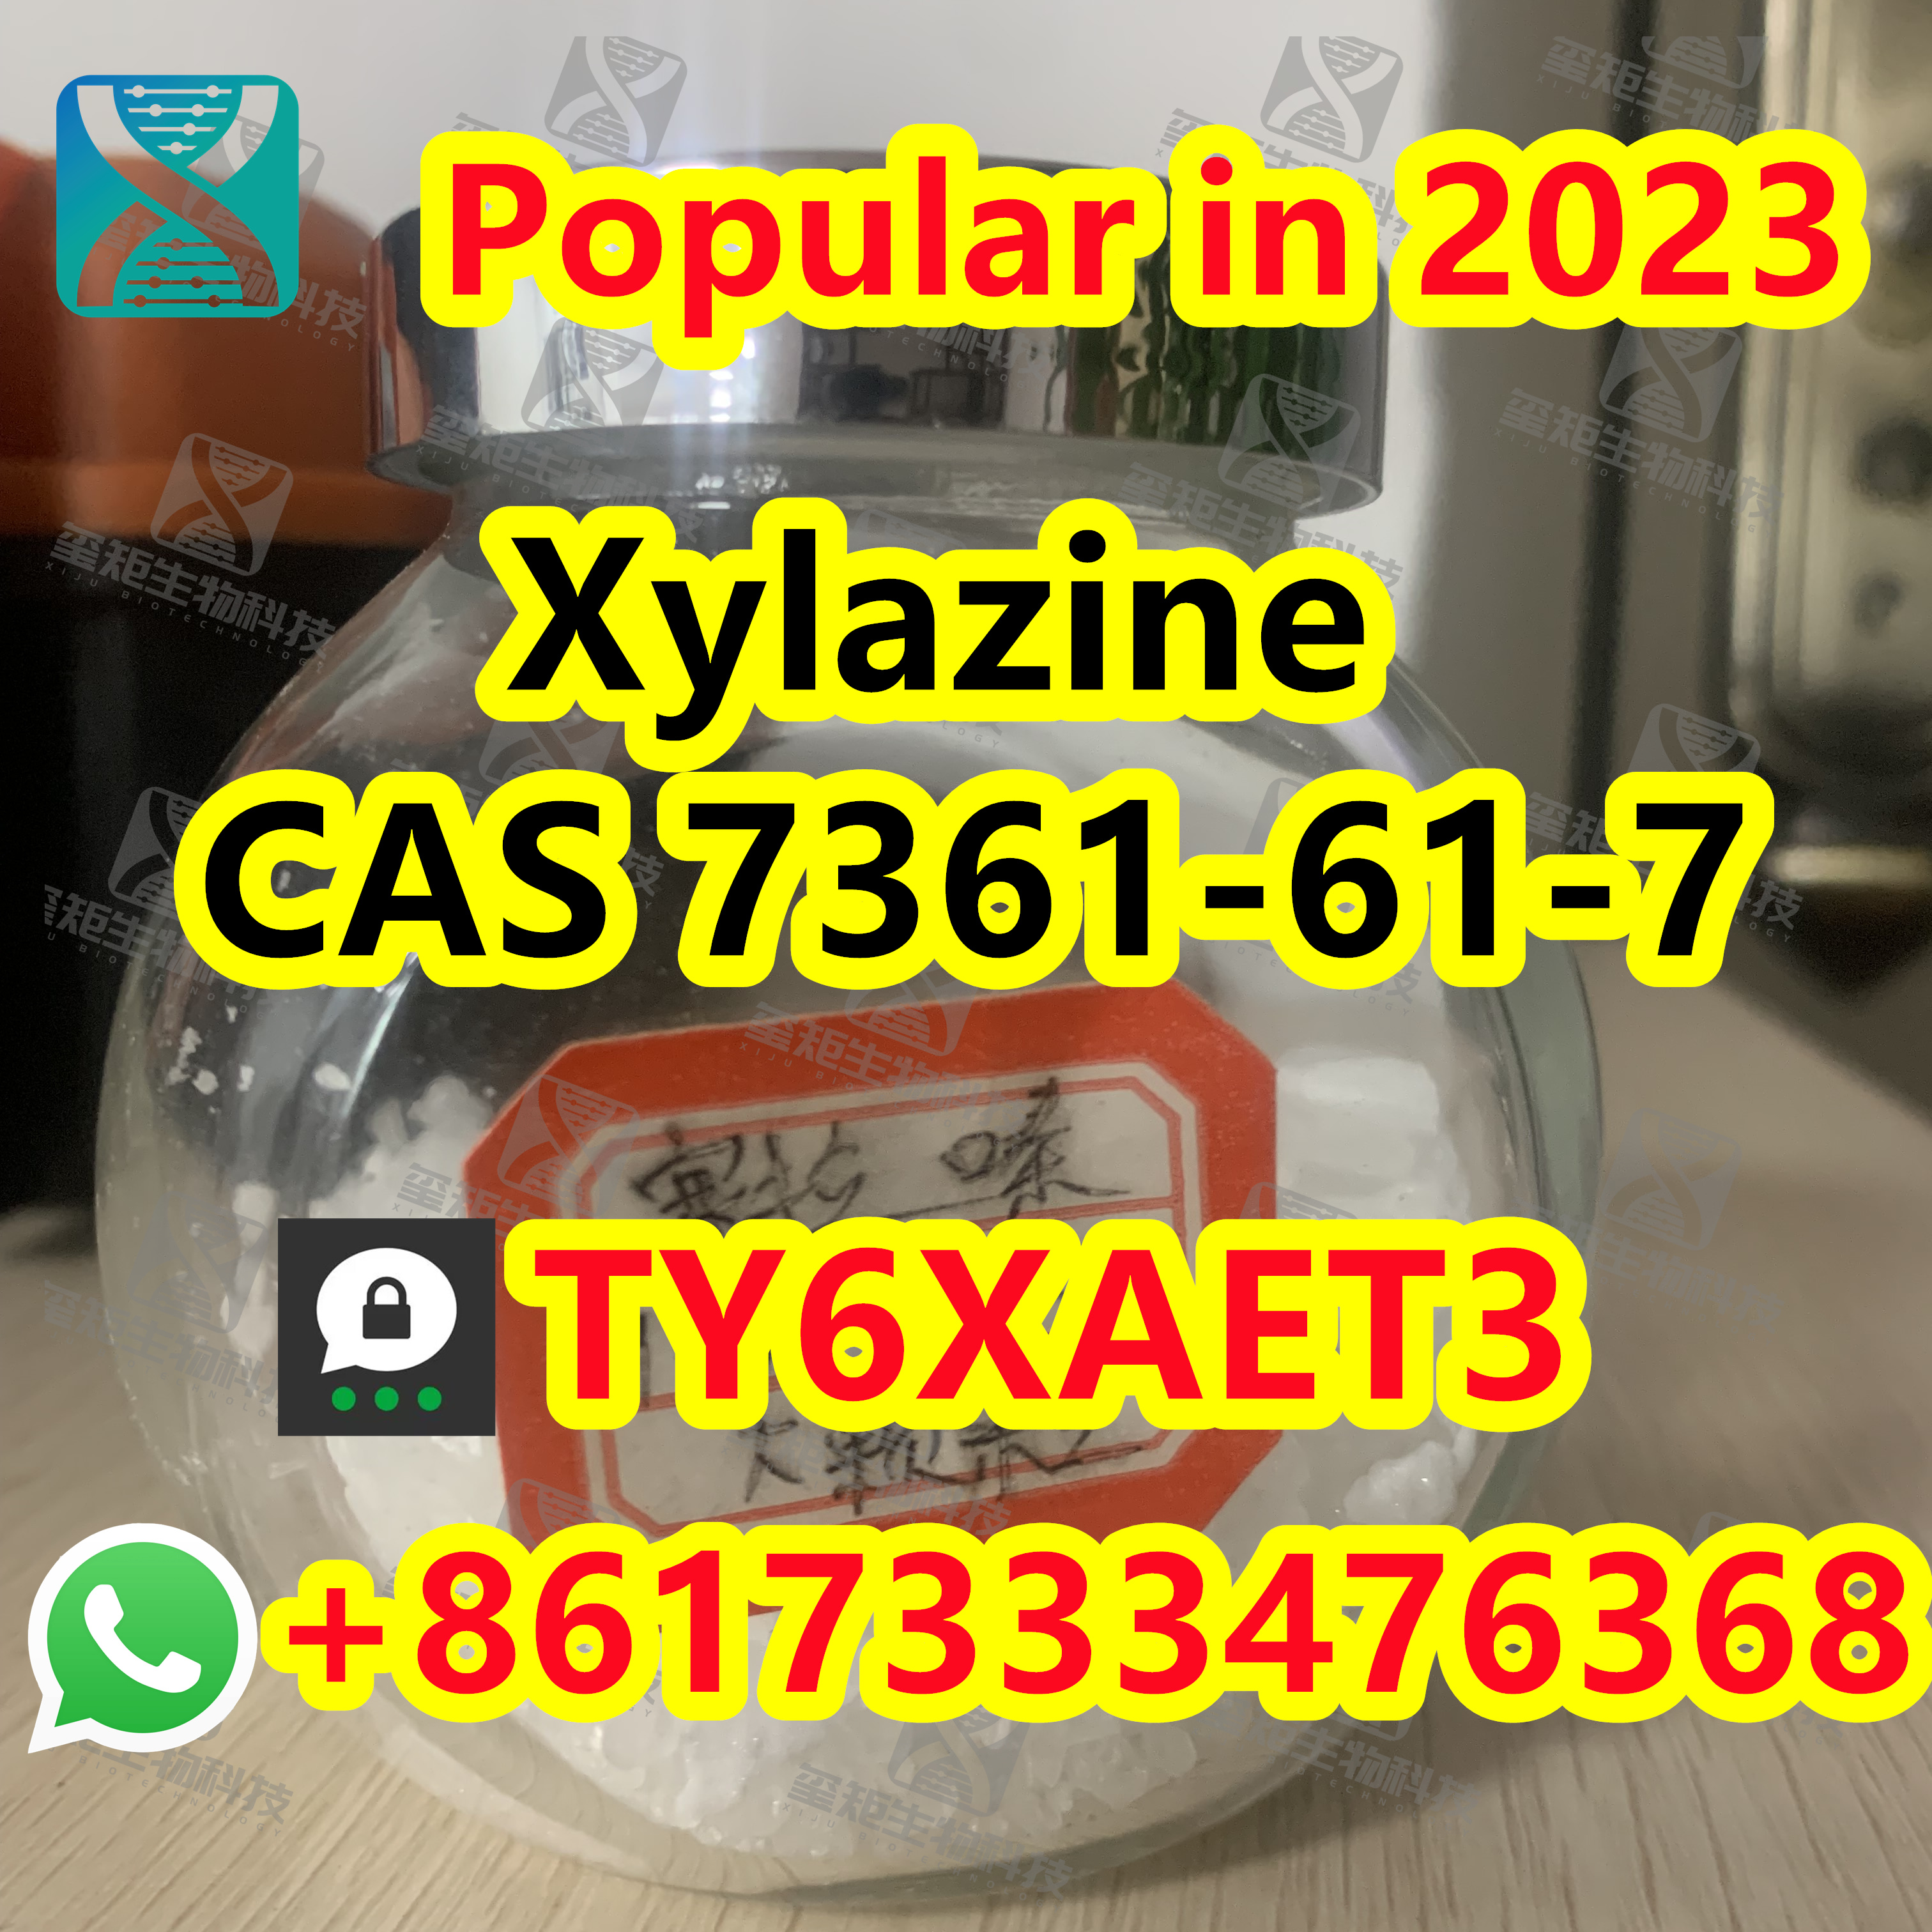 Xylazine CAS 7361-61-7 Popular in USA/EU, Wickr ME: deerluu Threema: TY6XAET3 Whatsapp/Tel: +86 17333476368 Foxmail/Skype: deer@wh-xiju.com